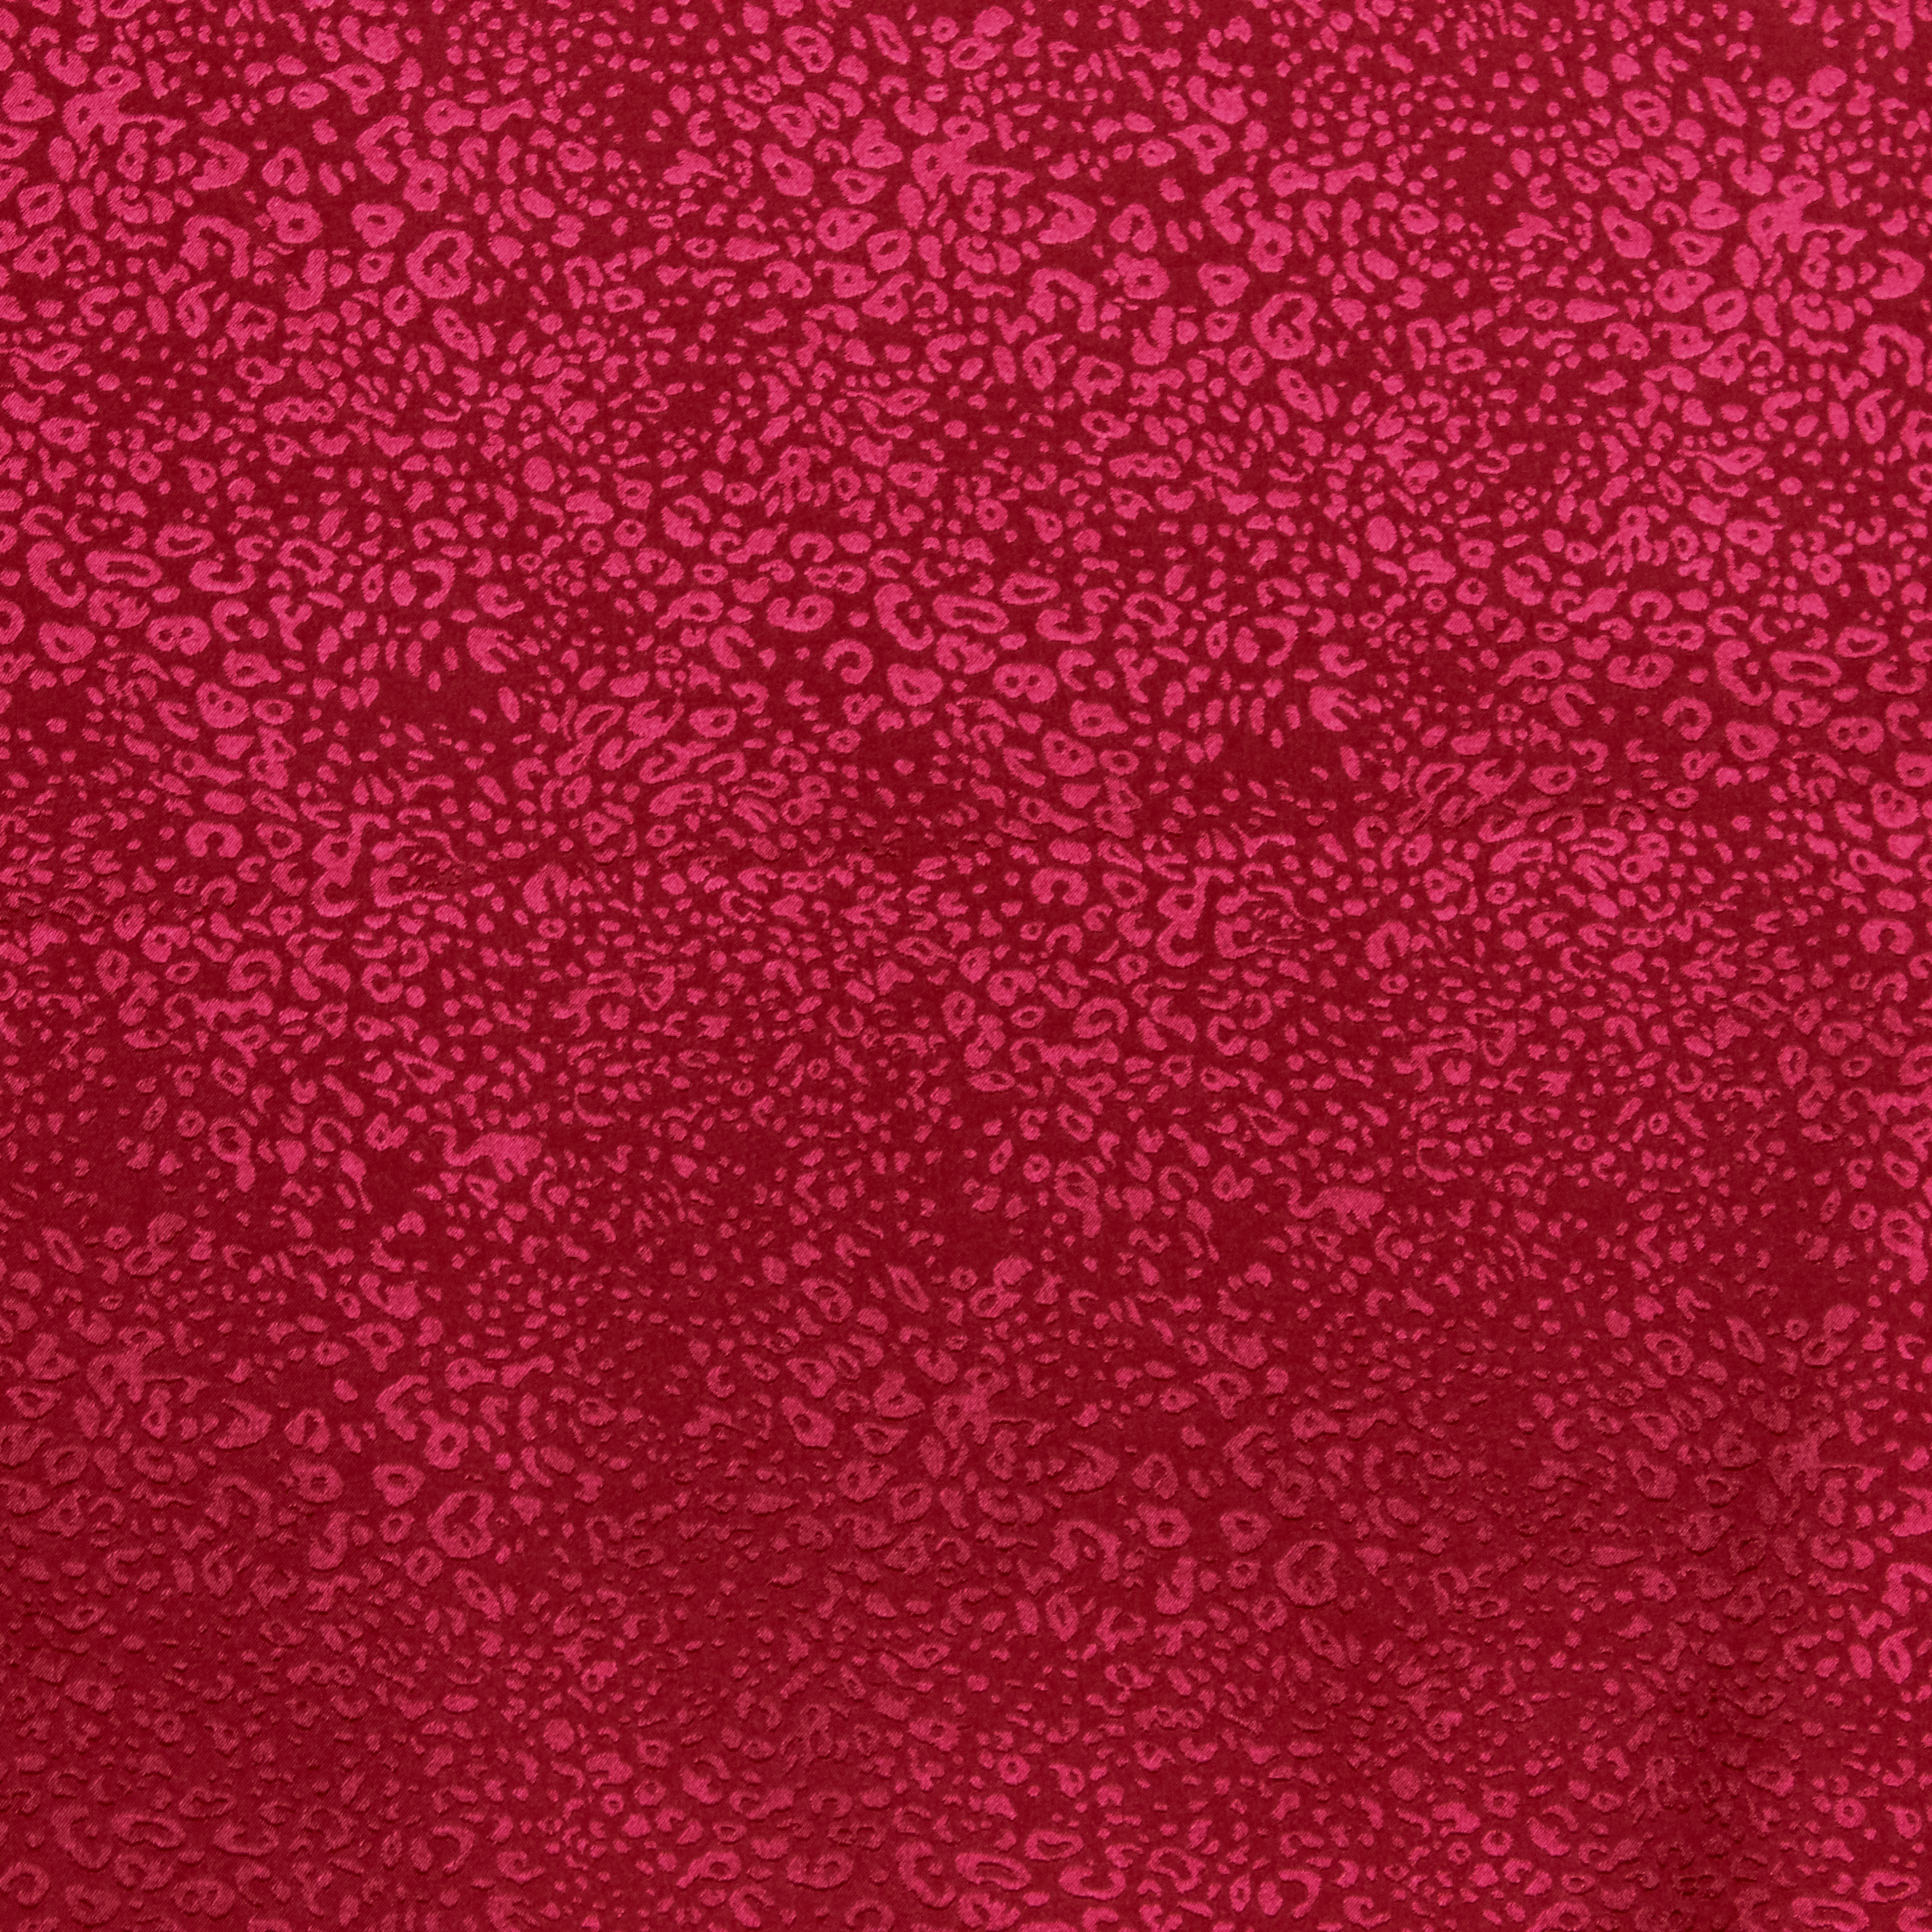 Rode polyester met panterpatroon